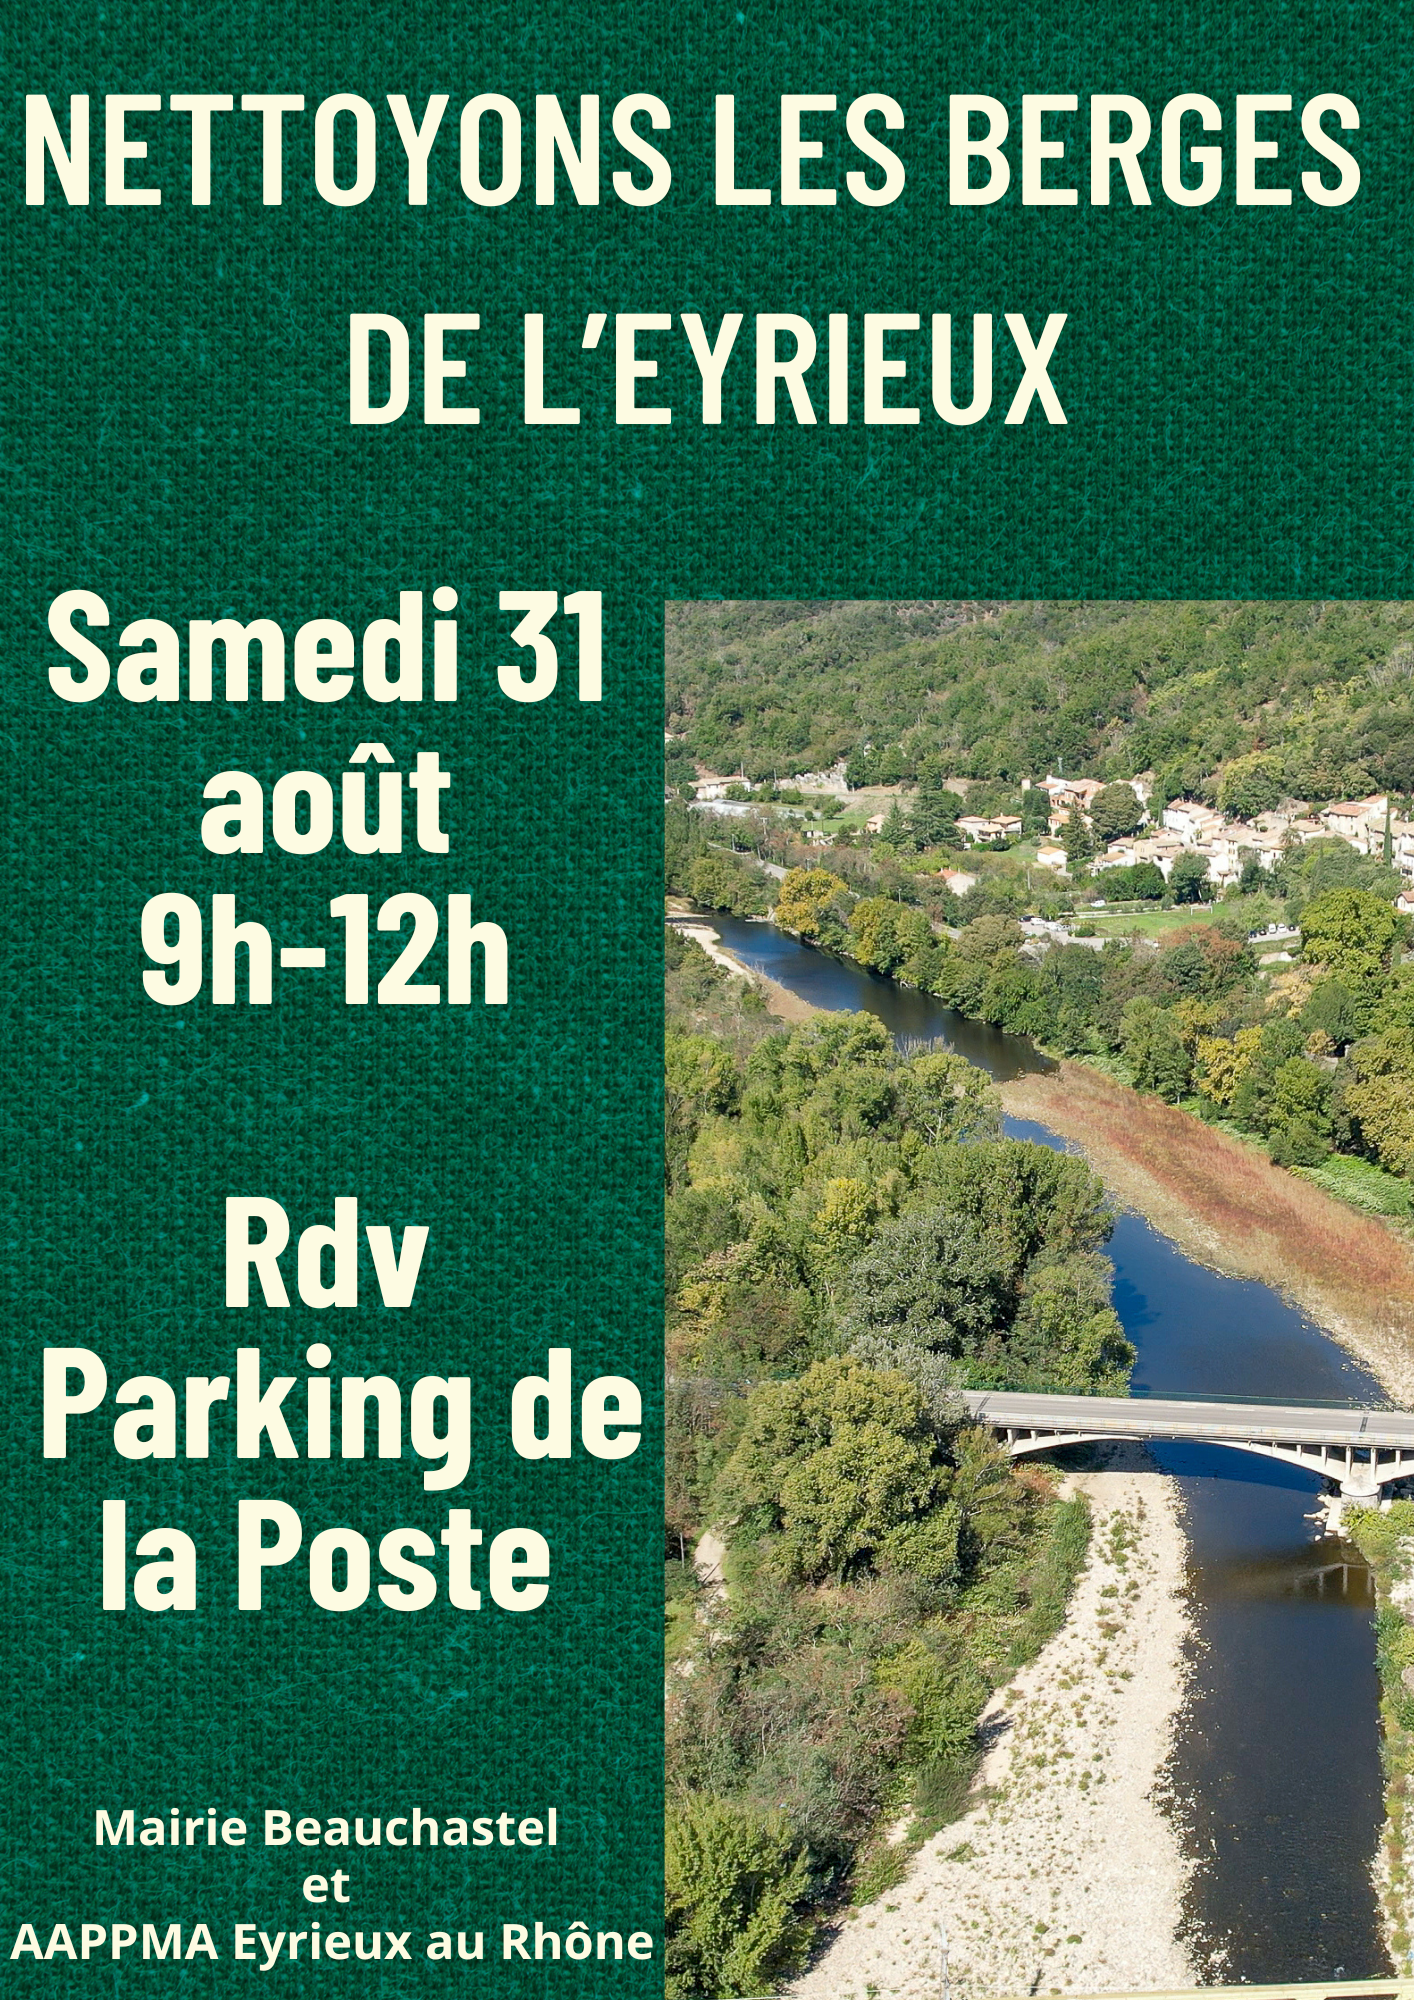 Events…Put it in your diary : Nettoyons les berges de L'Eyrieux